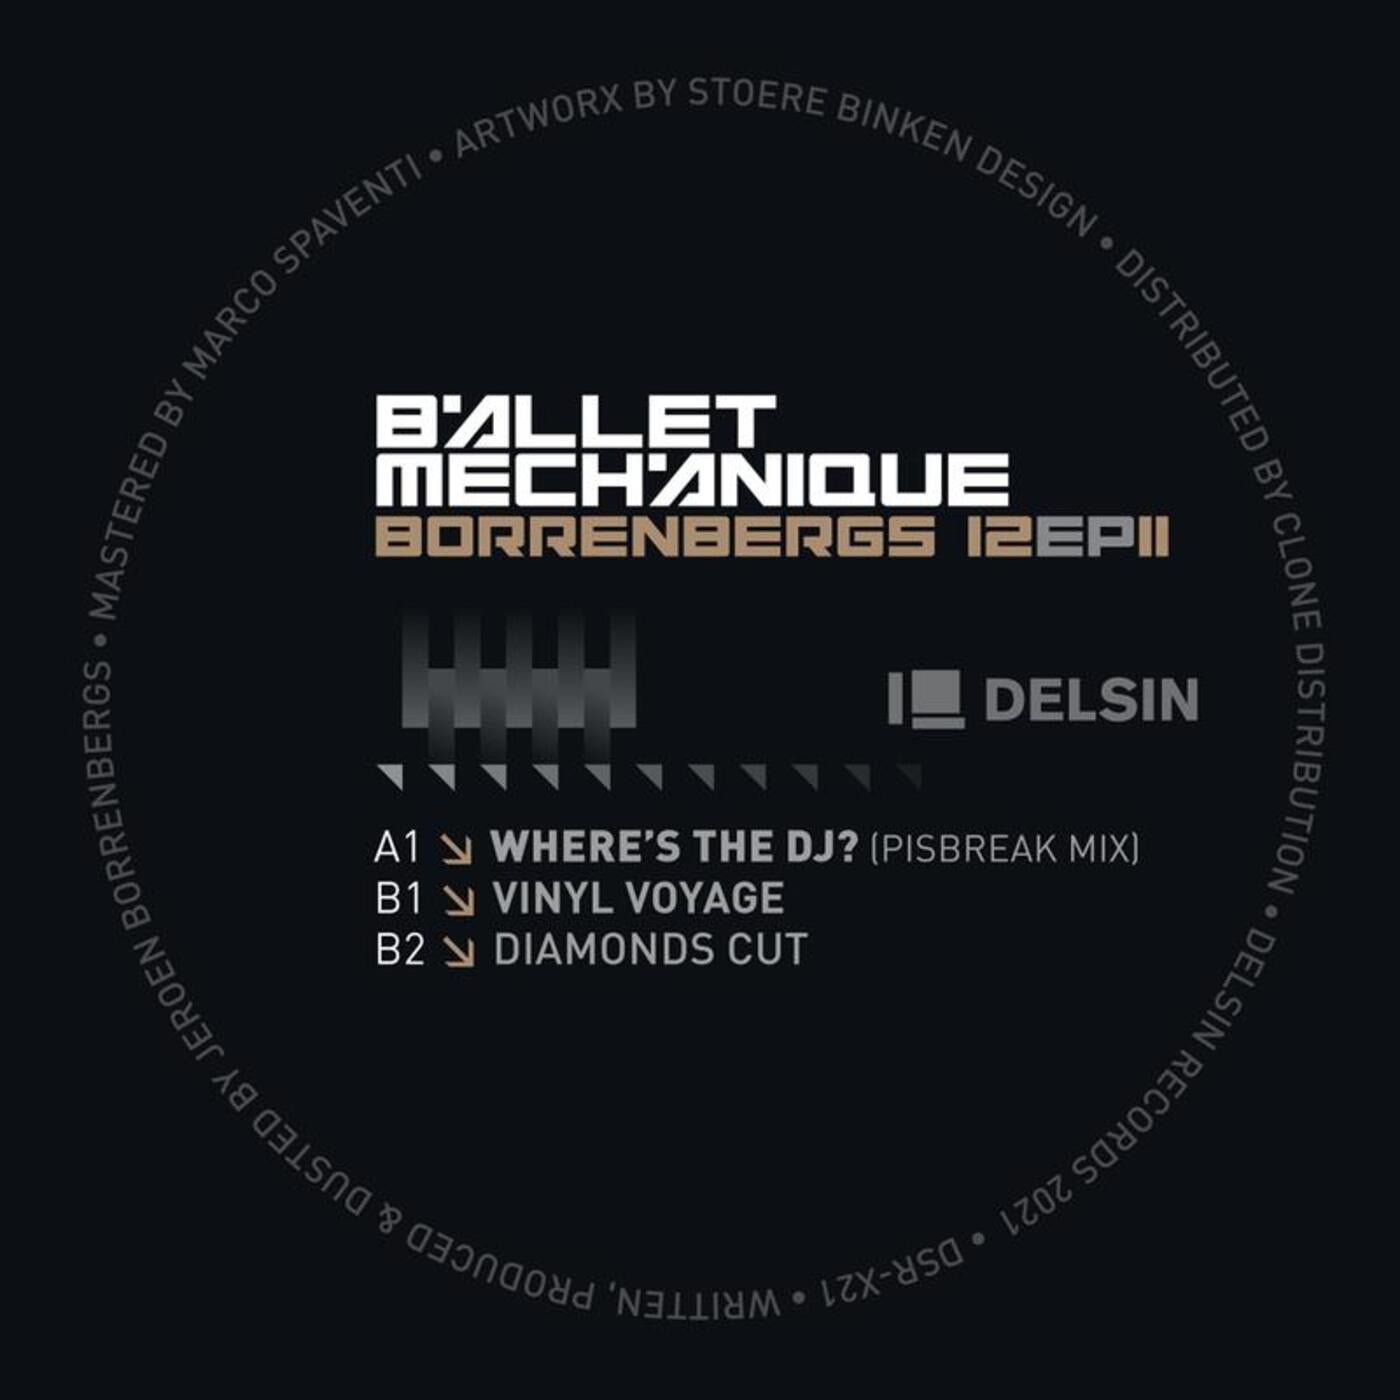 Ballet Mechanique - Borrenbergs 12 EP II [DSRX21]